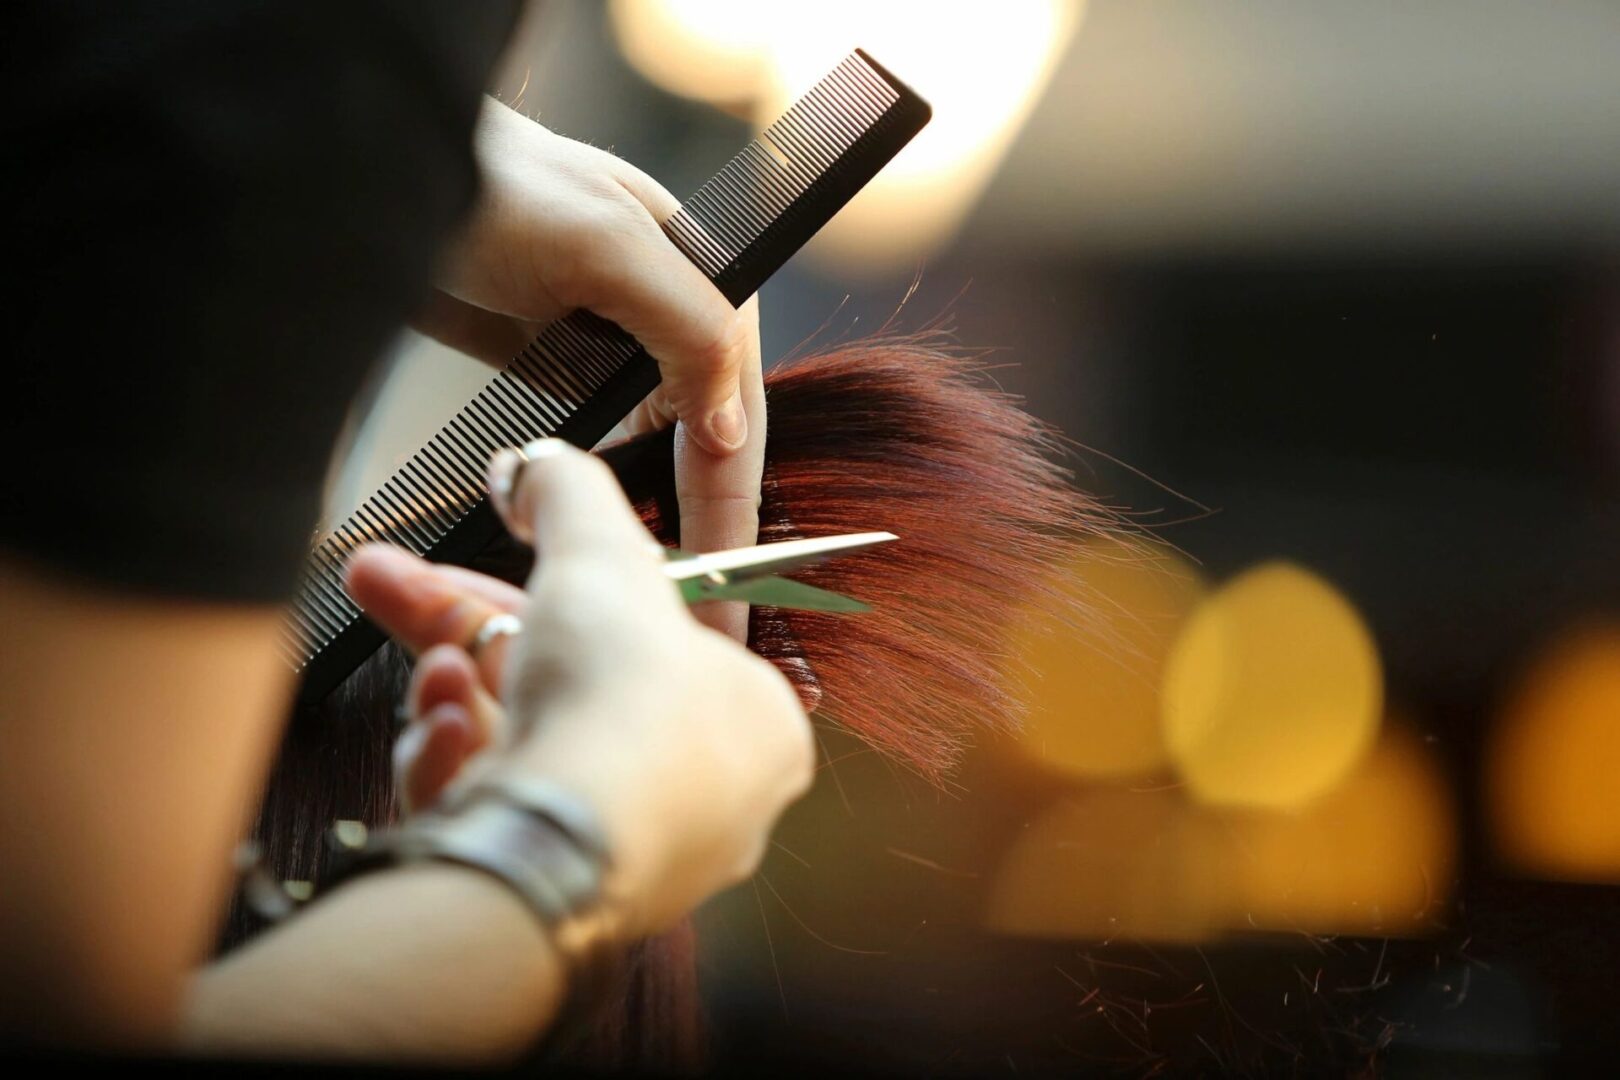 A person cutting their hair with scissors.